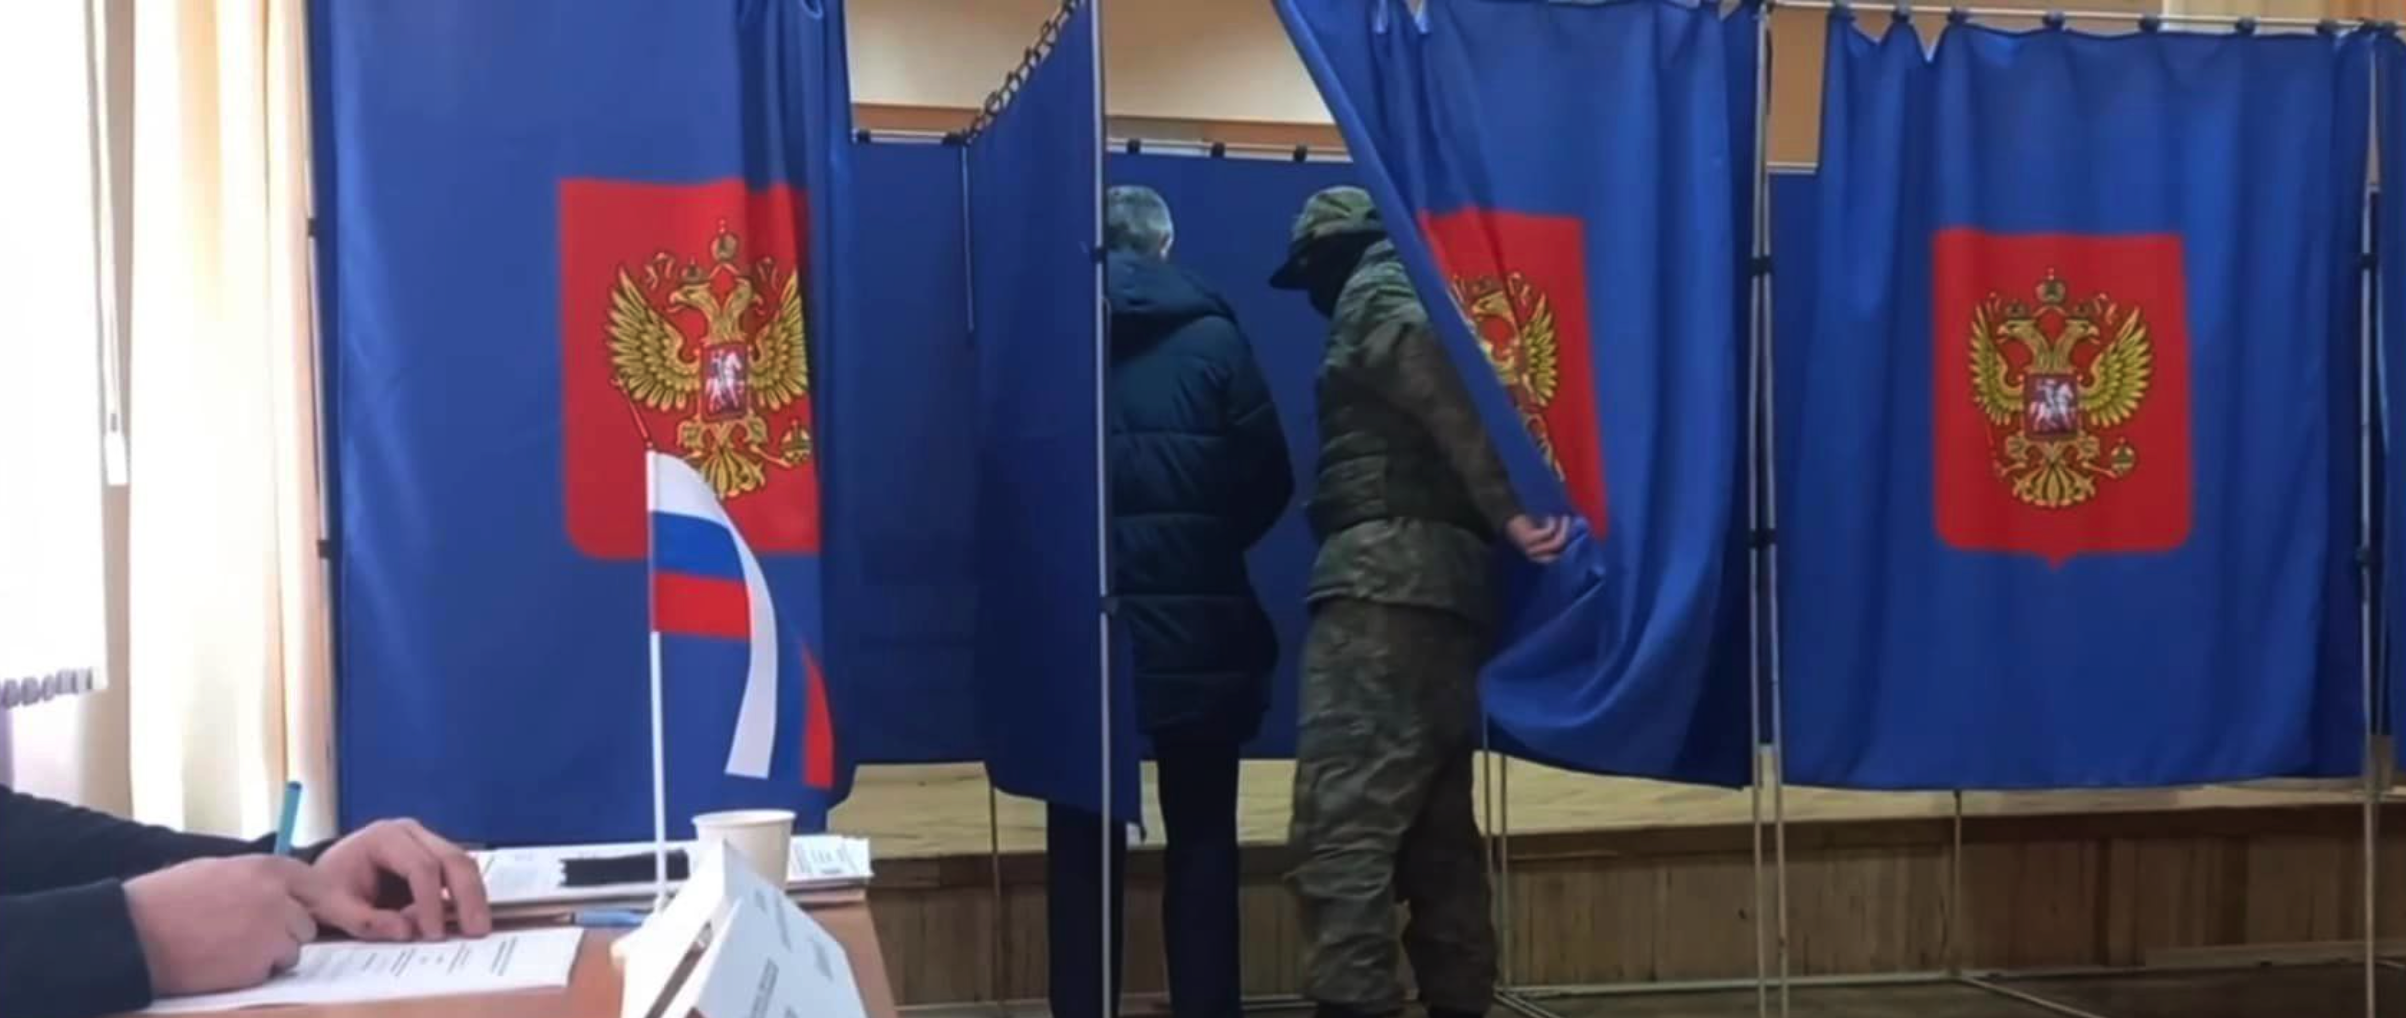 Putin’s “elections” in Ukraine’s occupied territories: AK-47s, threats and coercion